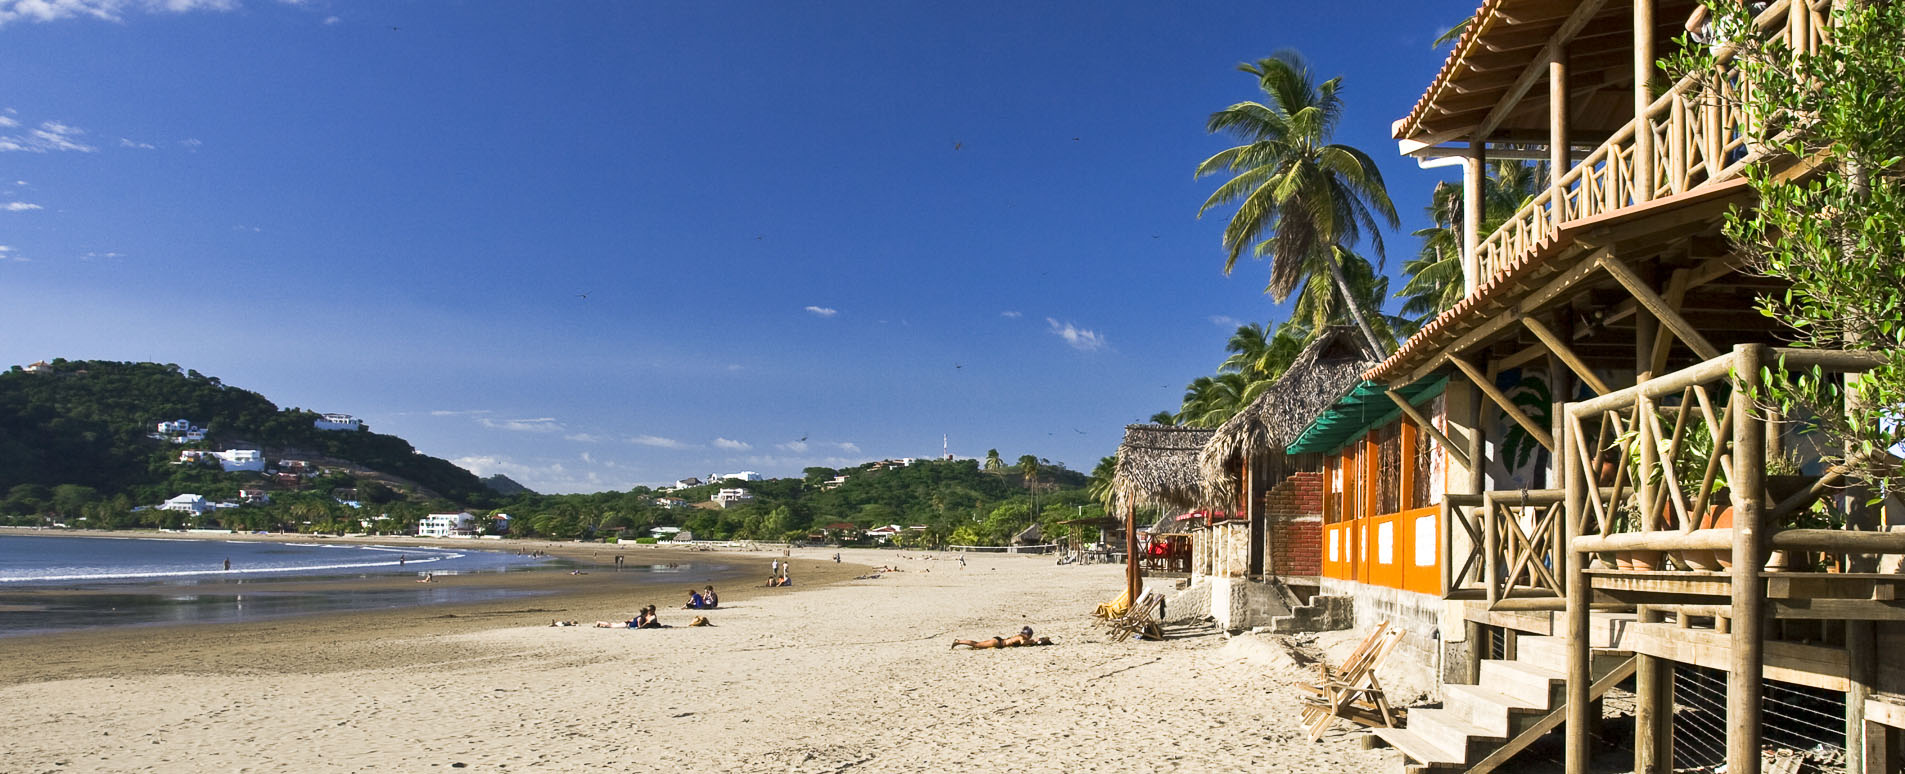 Nicaragua Pacific beach holidays